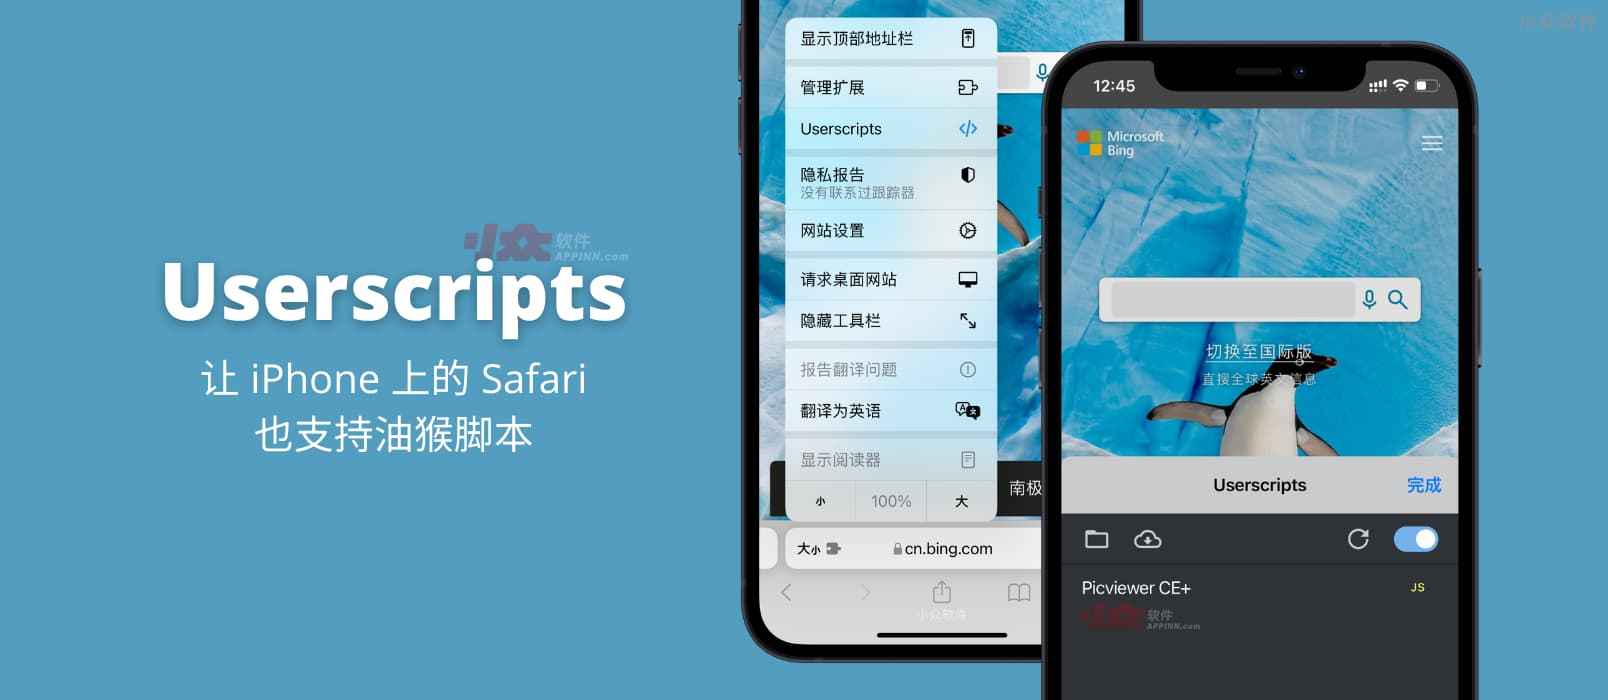 Userscripts - 免费开源的「油猴脚本」管理器，让 iPhone 上的 Safari 也支持油猴脚本